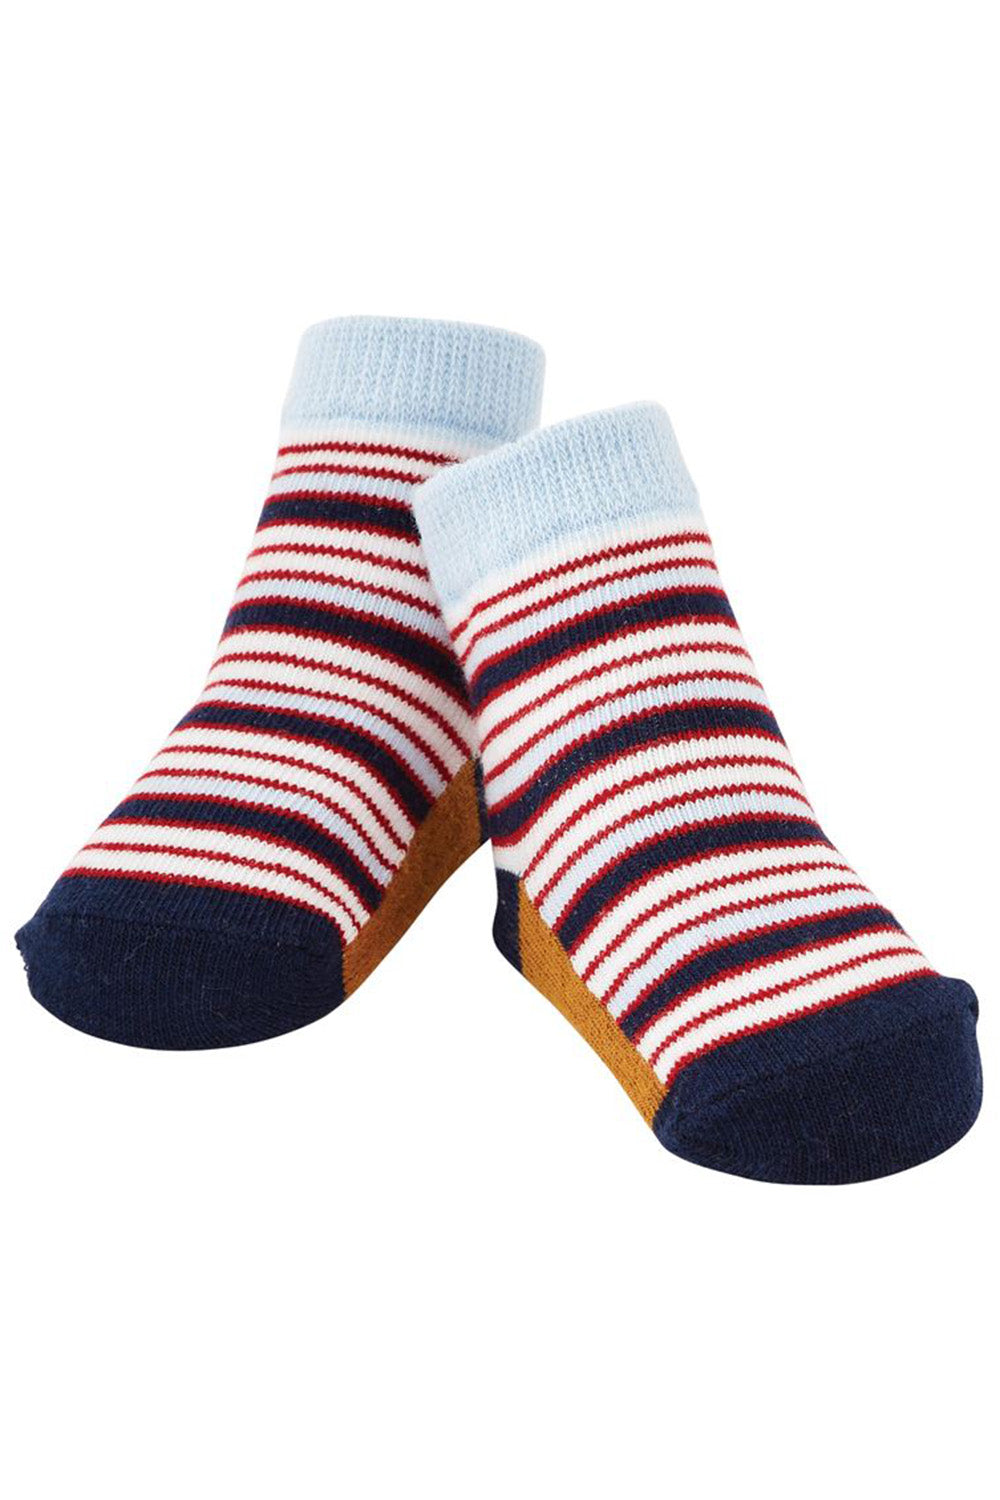 Baby Socks - Navy & Red Stripe